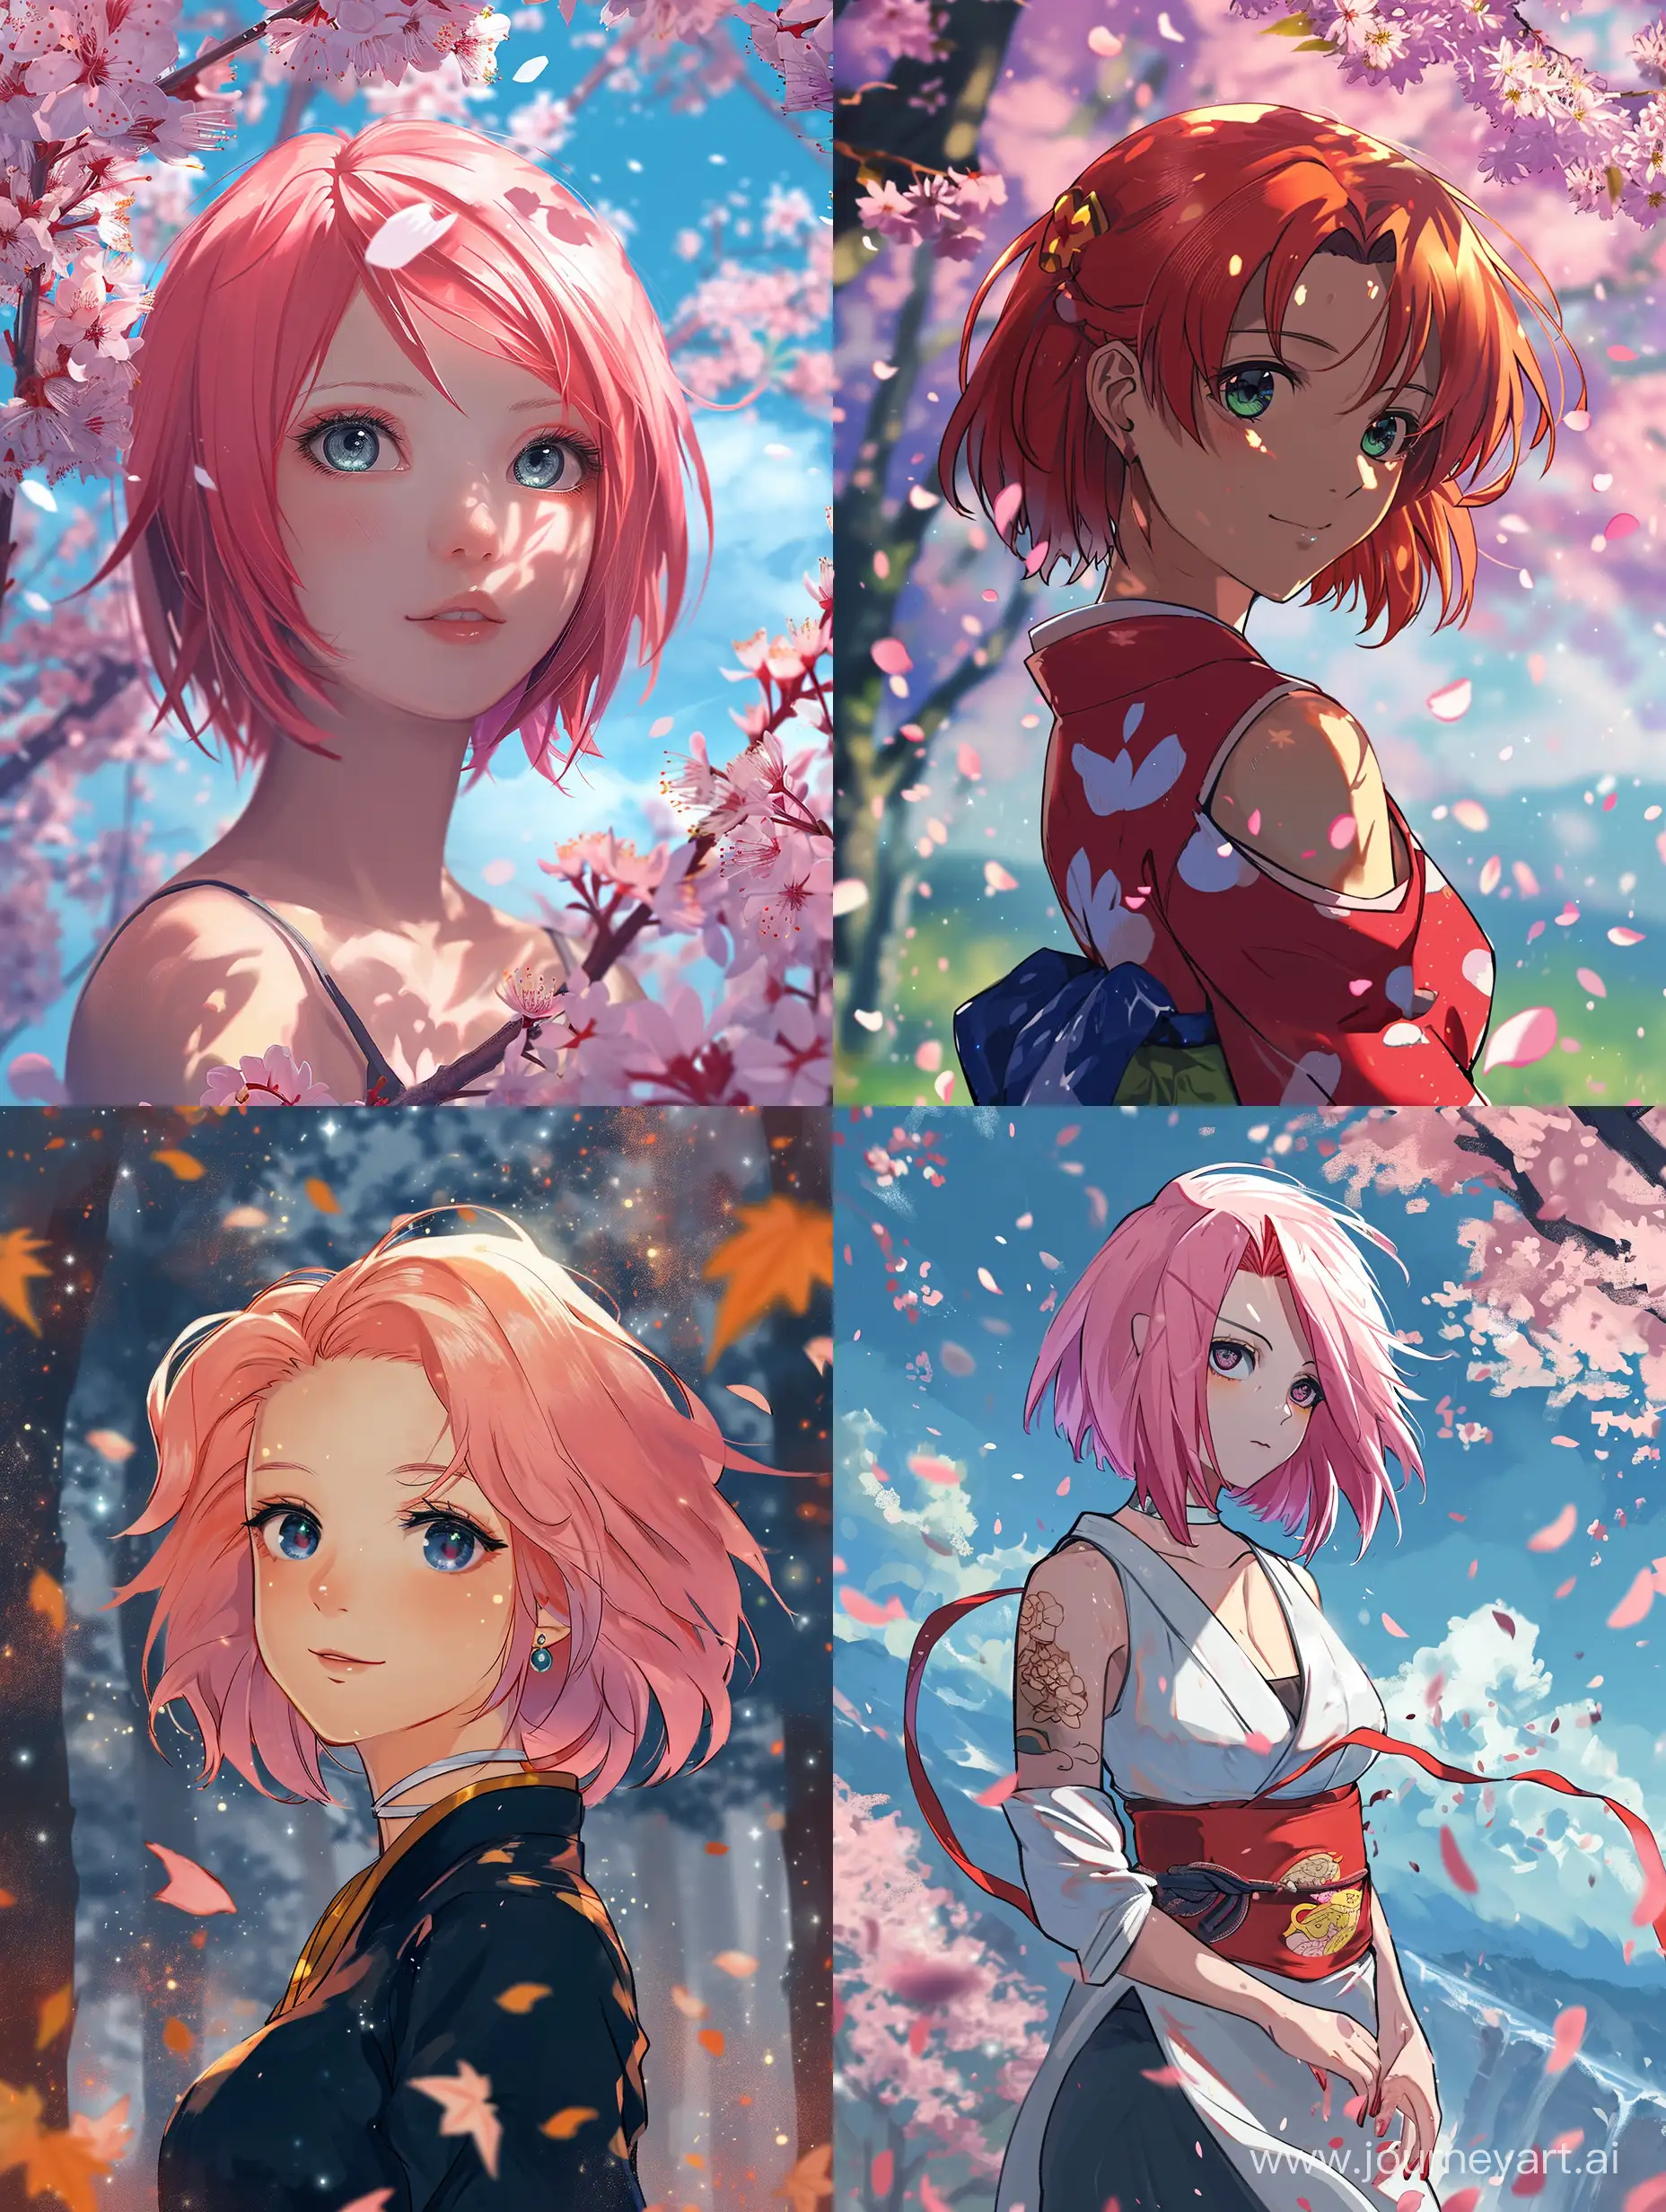 Sakura-Haruno-in-Enchanting-Studio-GhibliInspired-Art